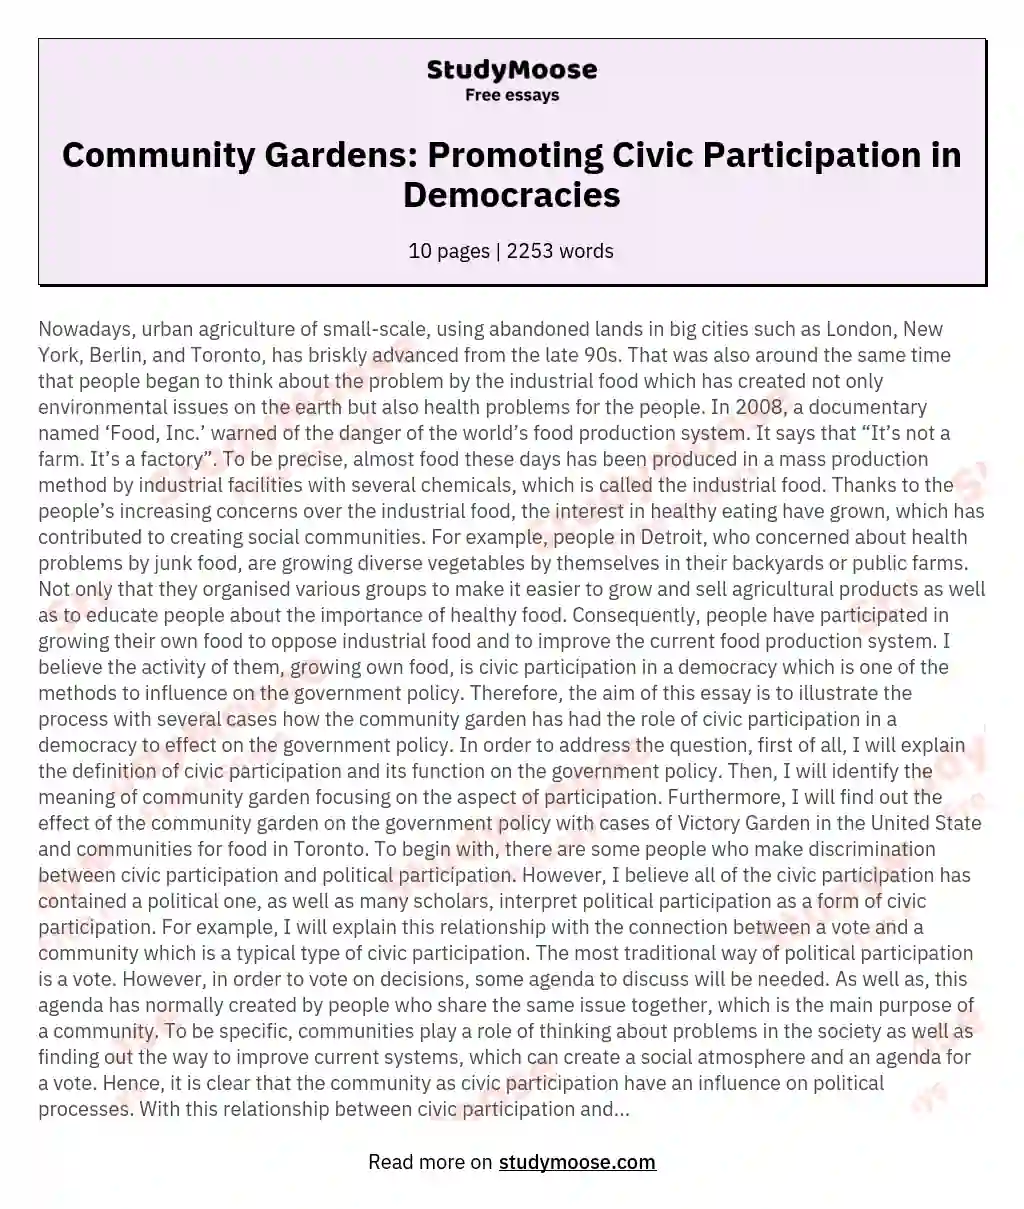 Community Gardens: Promoting Civic Participation in Democracies essay